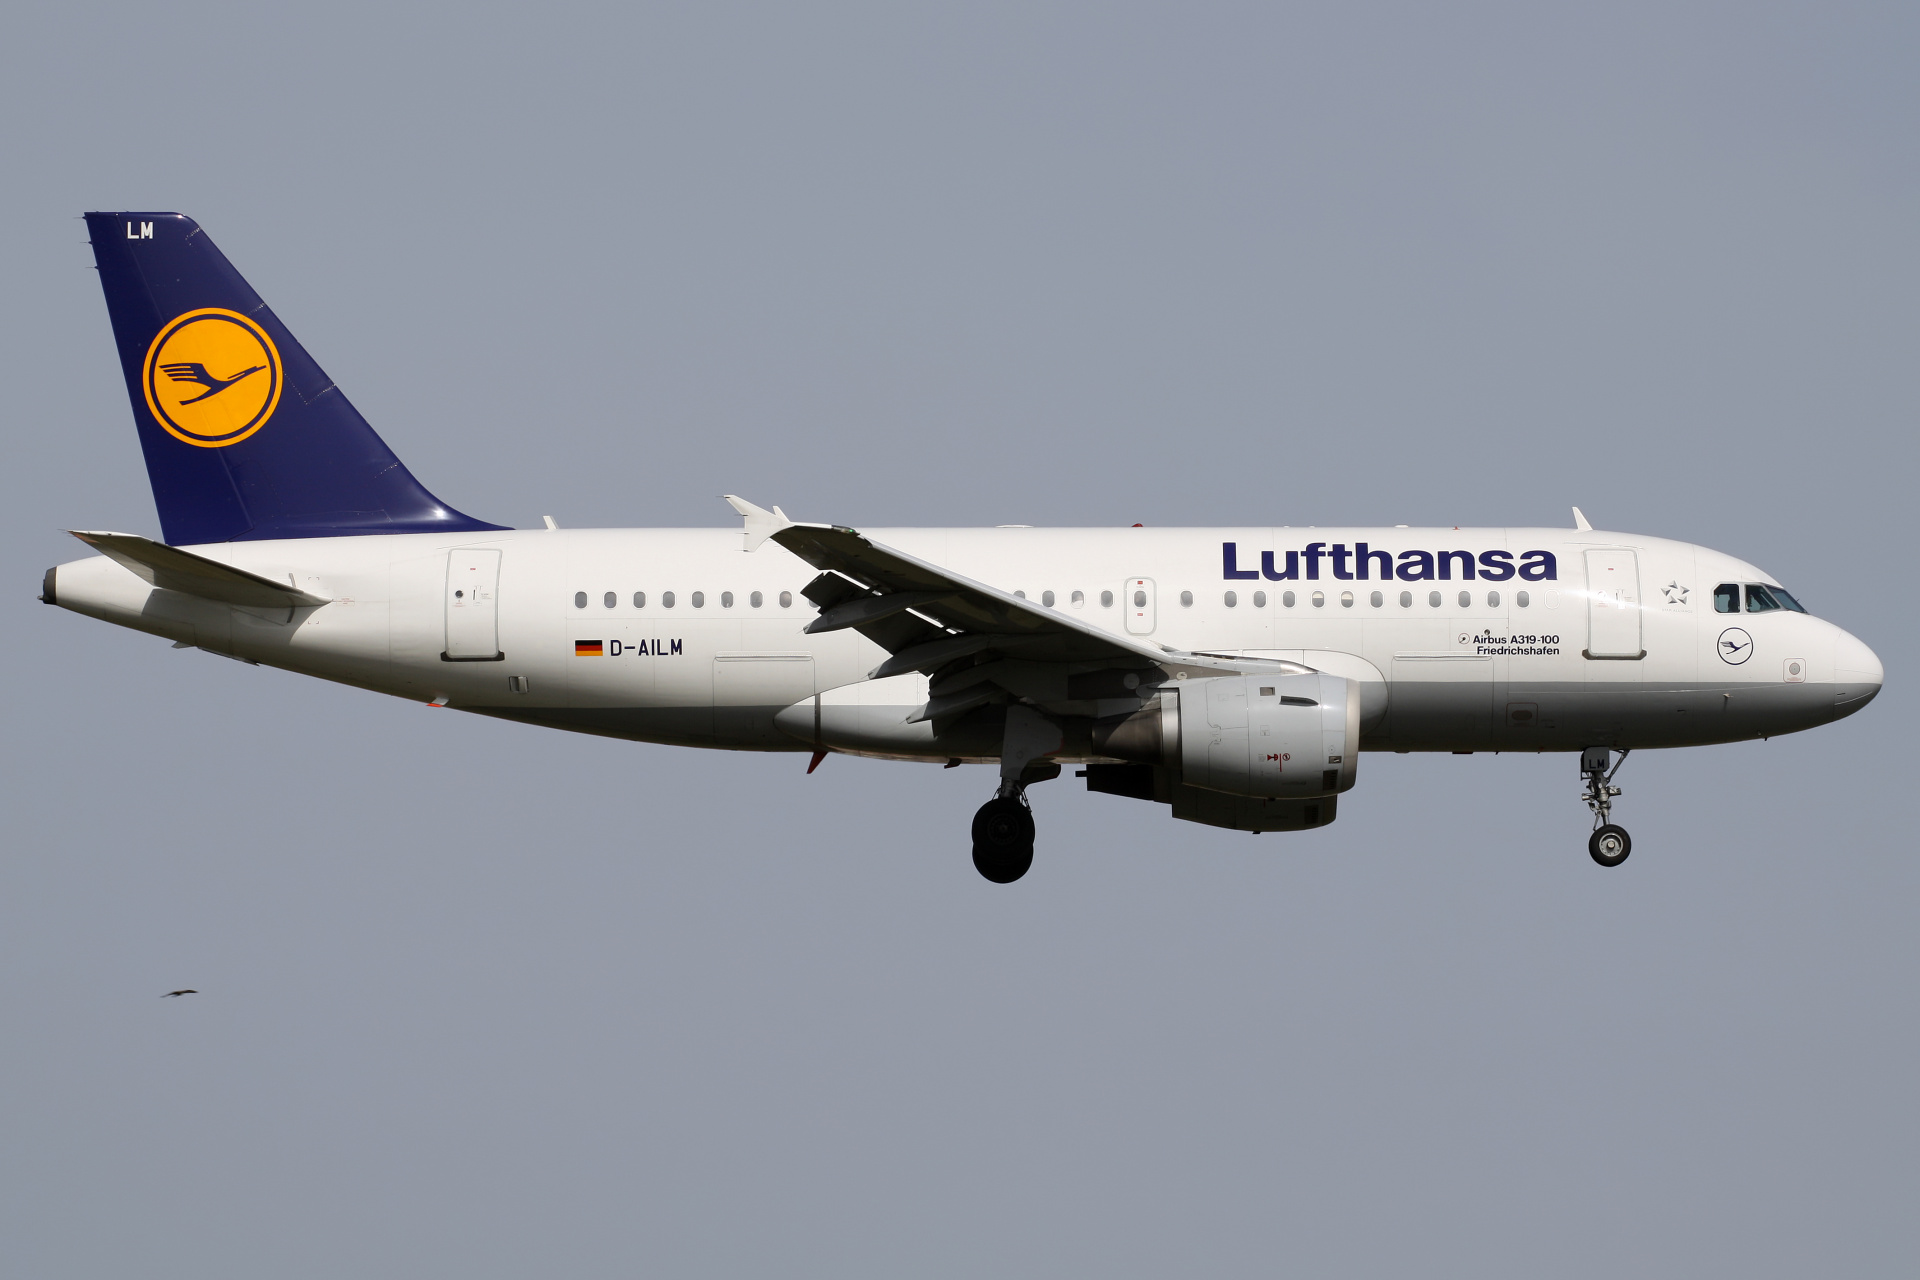 D-AILM (Aircraft » EPWA Spotting » Airbus A319-100 » Lufthansa)